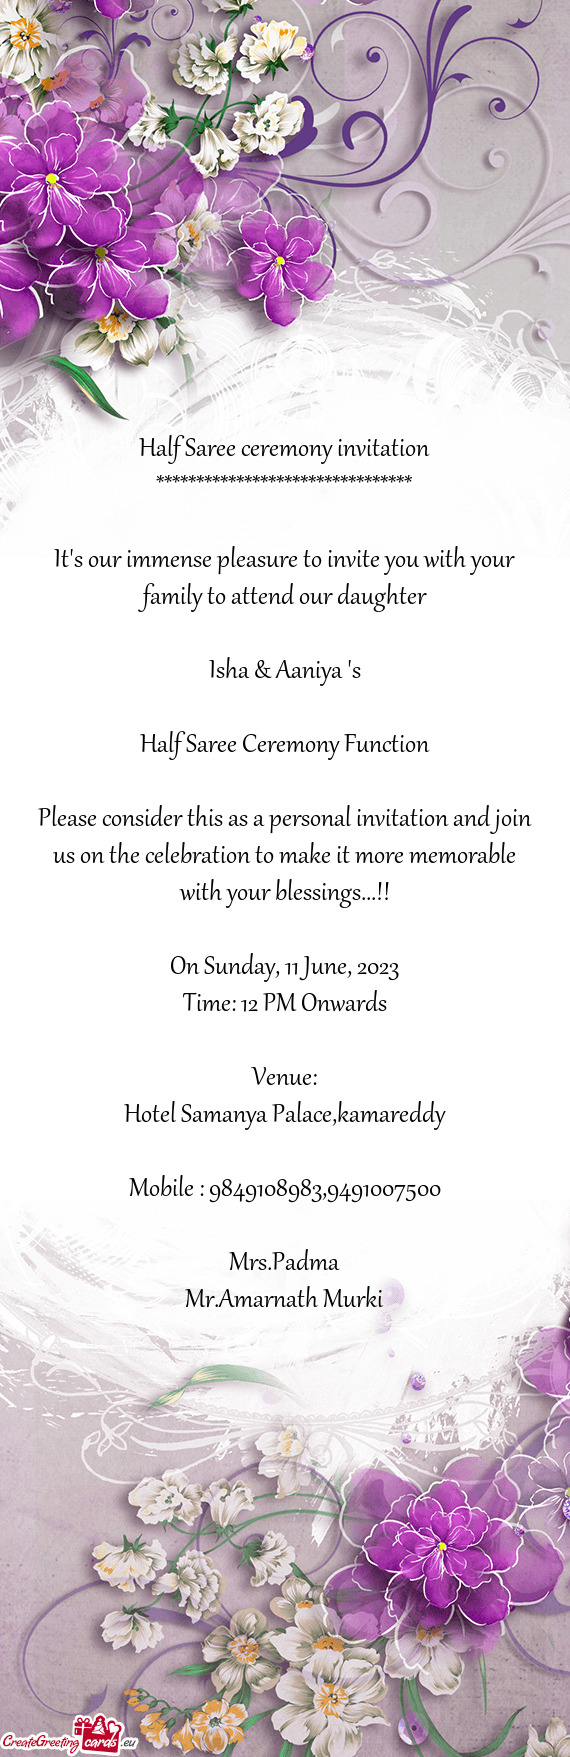 Half Saree Ceremony Function